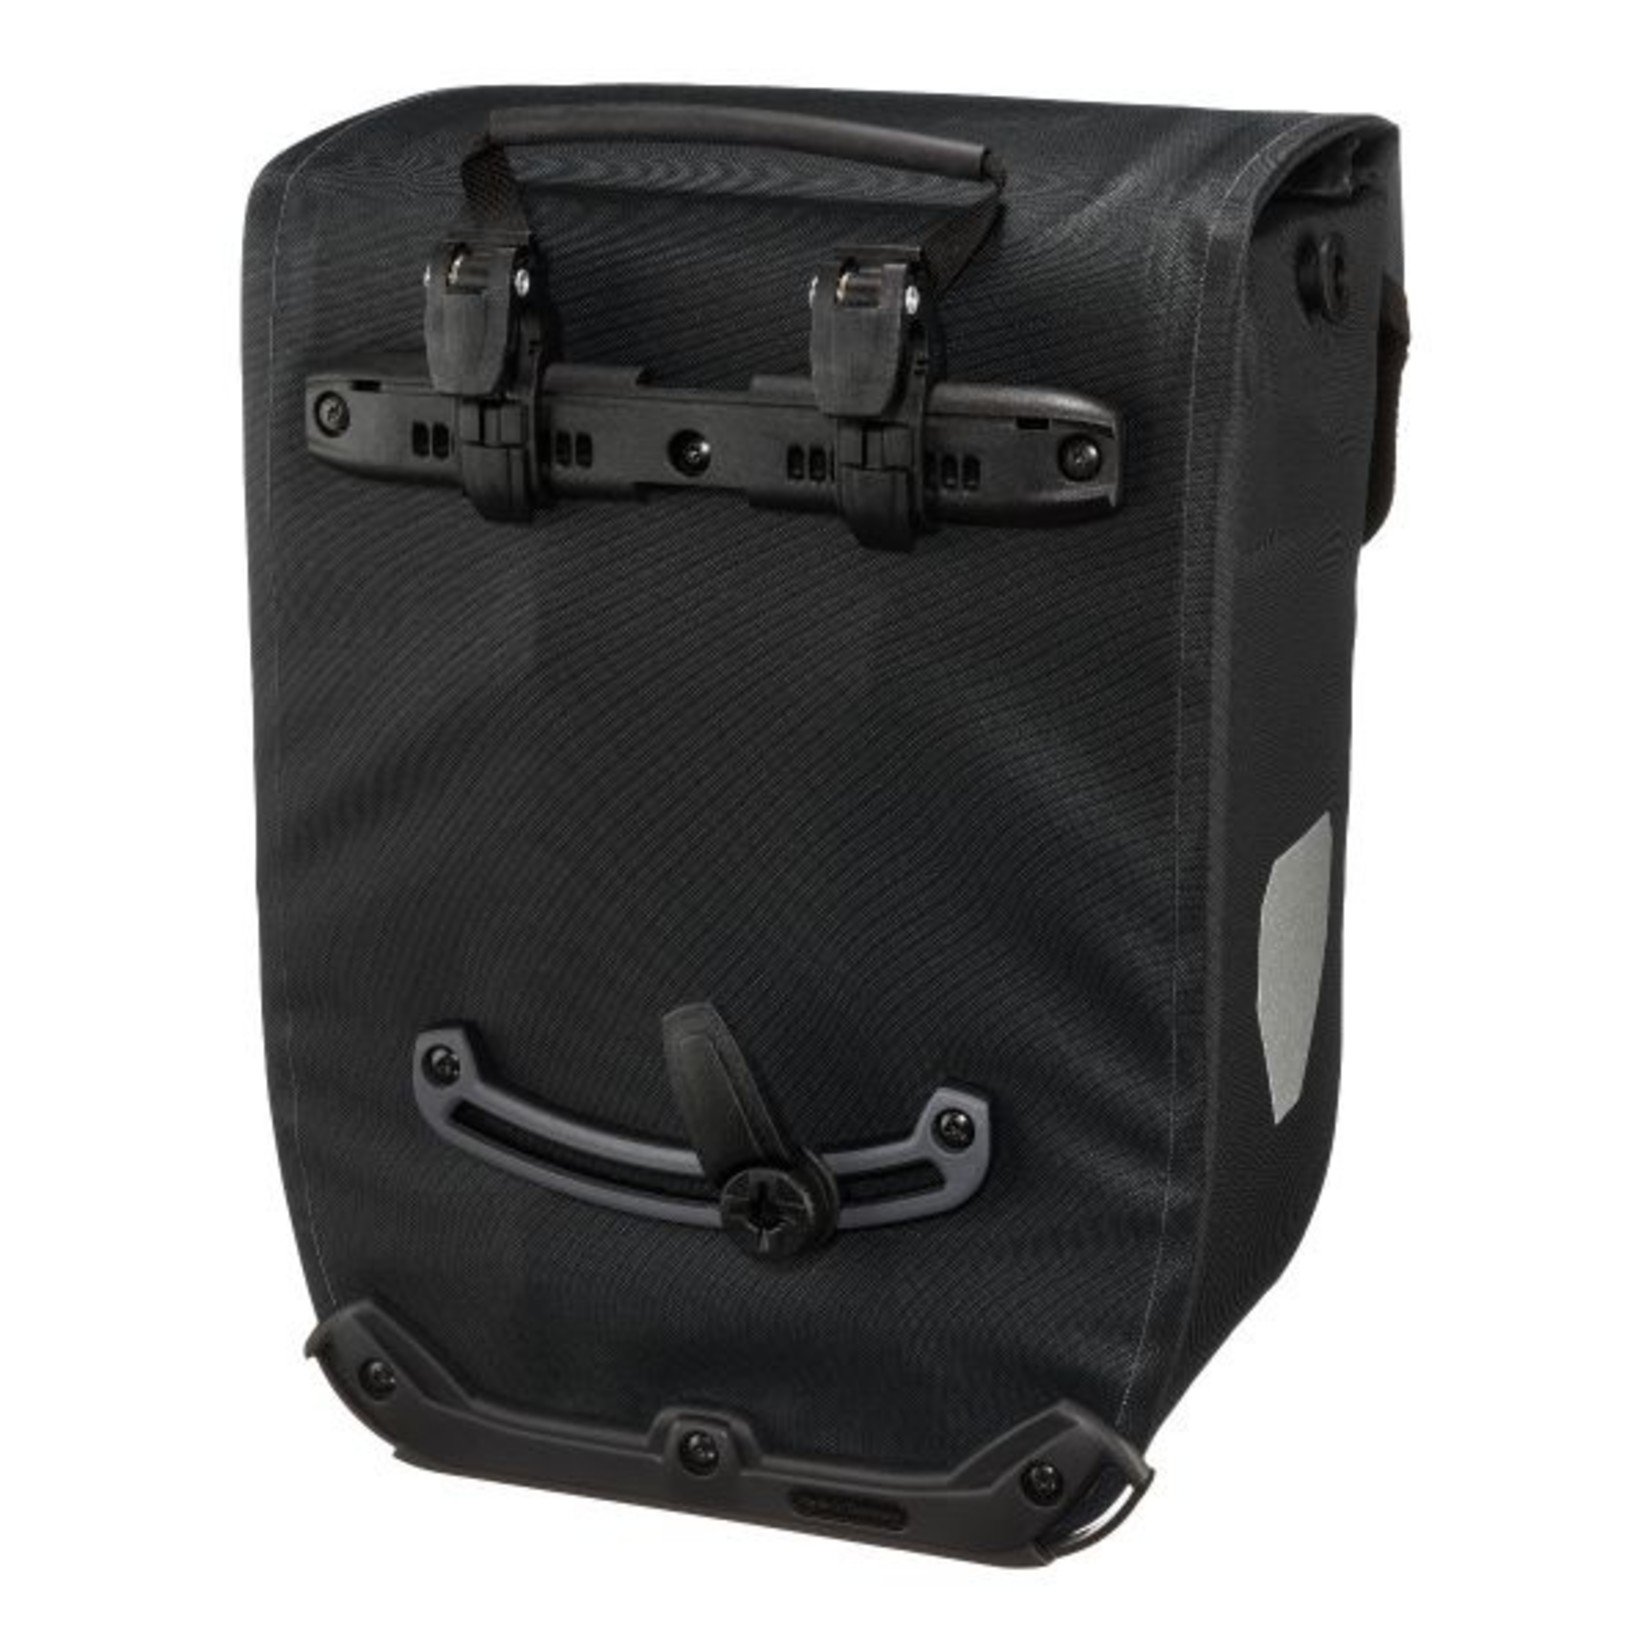 Ortlieb Ortlieb eMate Pannier Bag QL2.1 (Single Bag) F8220 - Black for Ebike